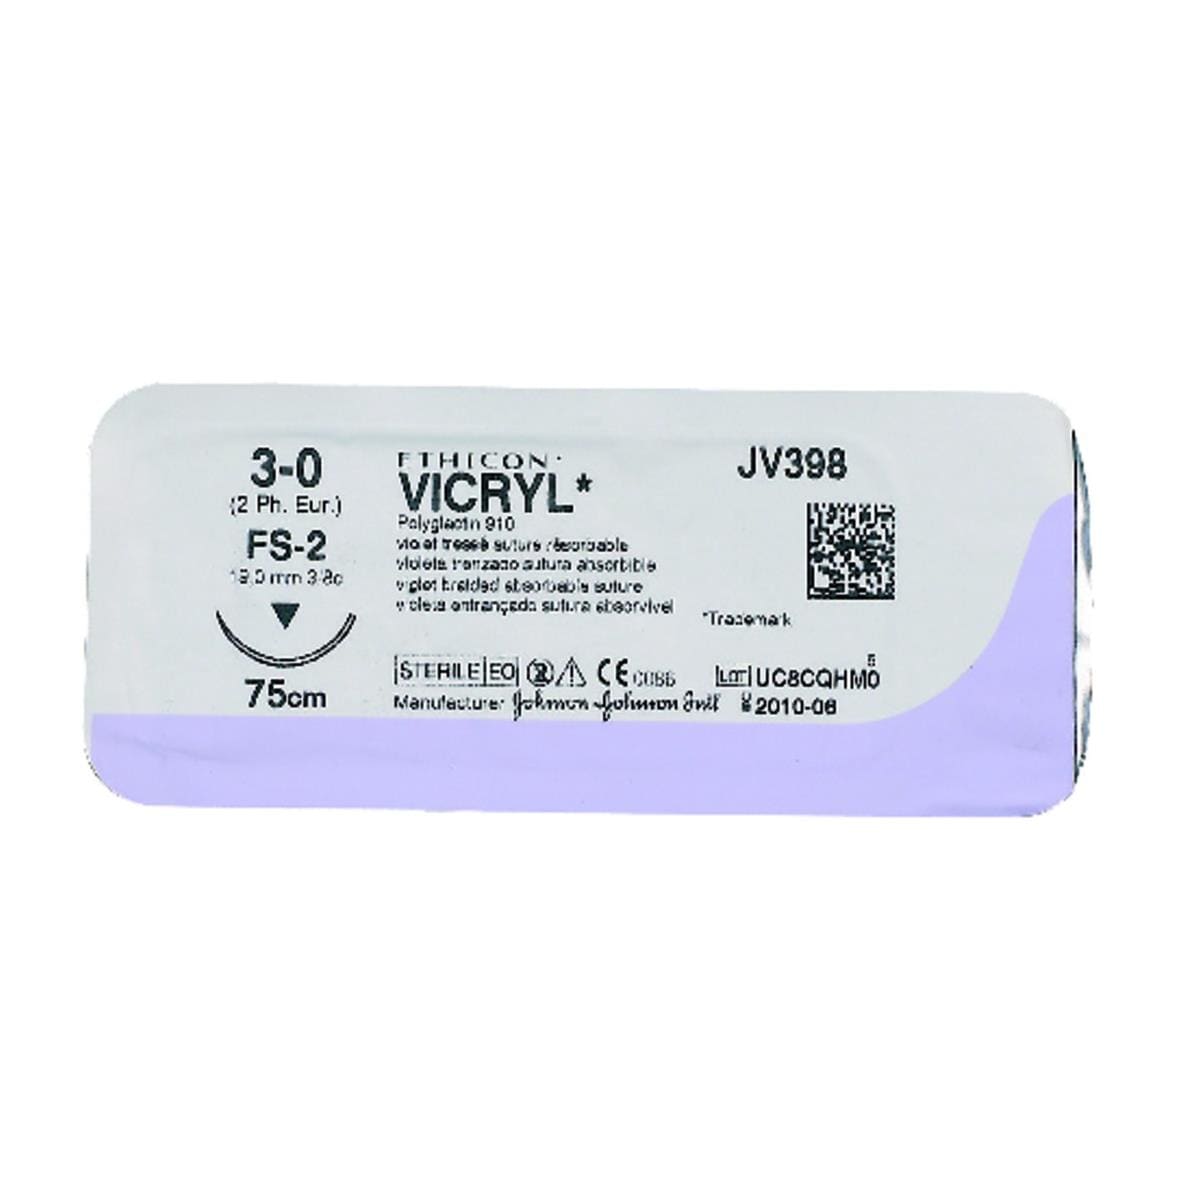 Fil Vicryl violet ETHICON - JV397 - Bote de 36